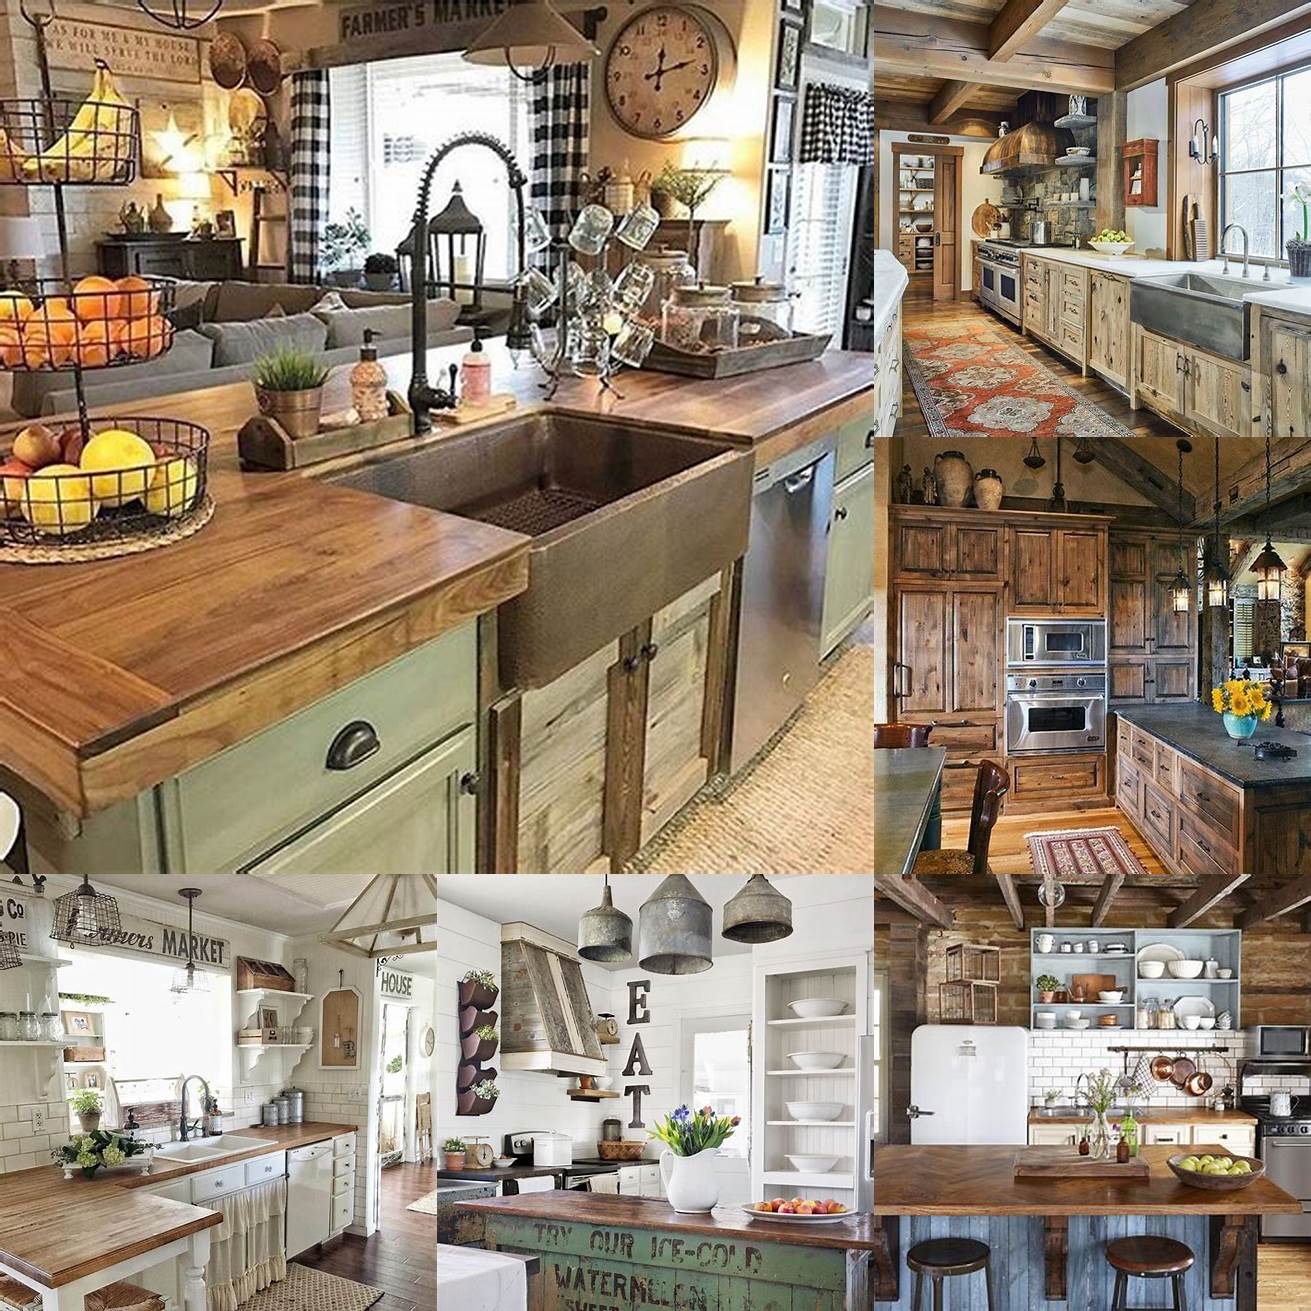 Rustic farmhouse kitchen